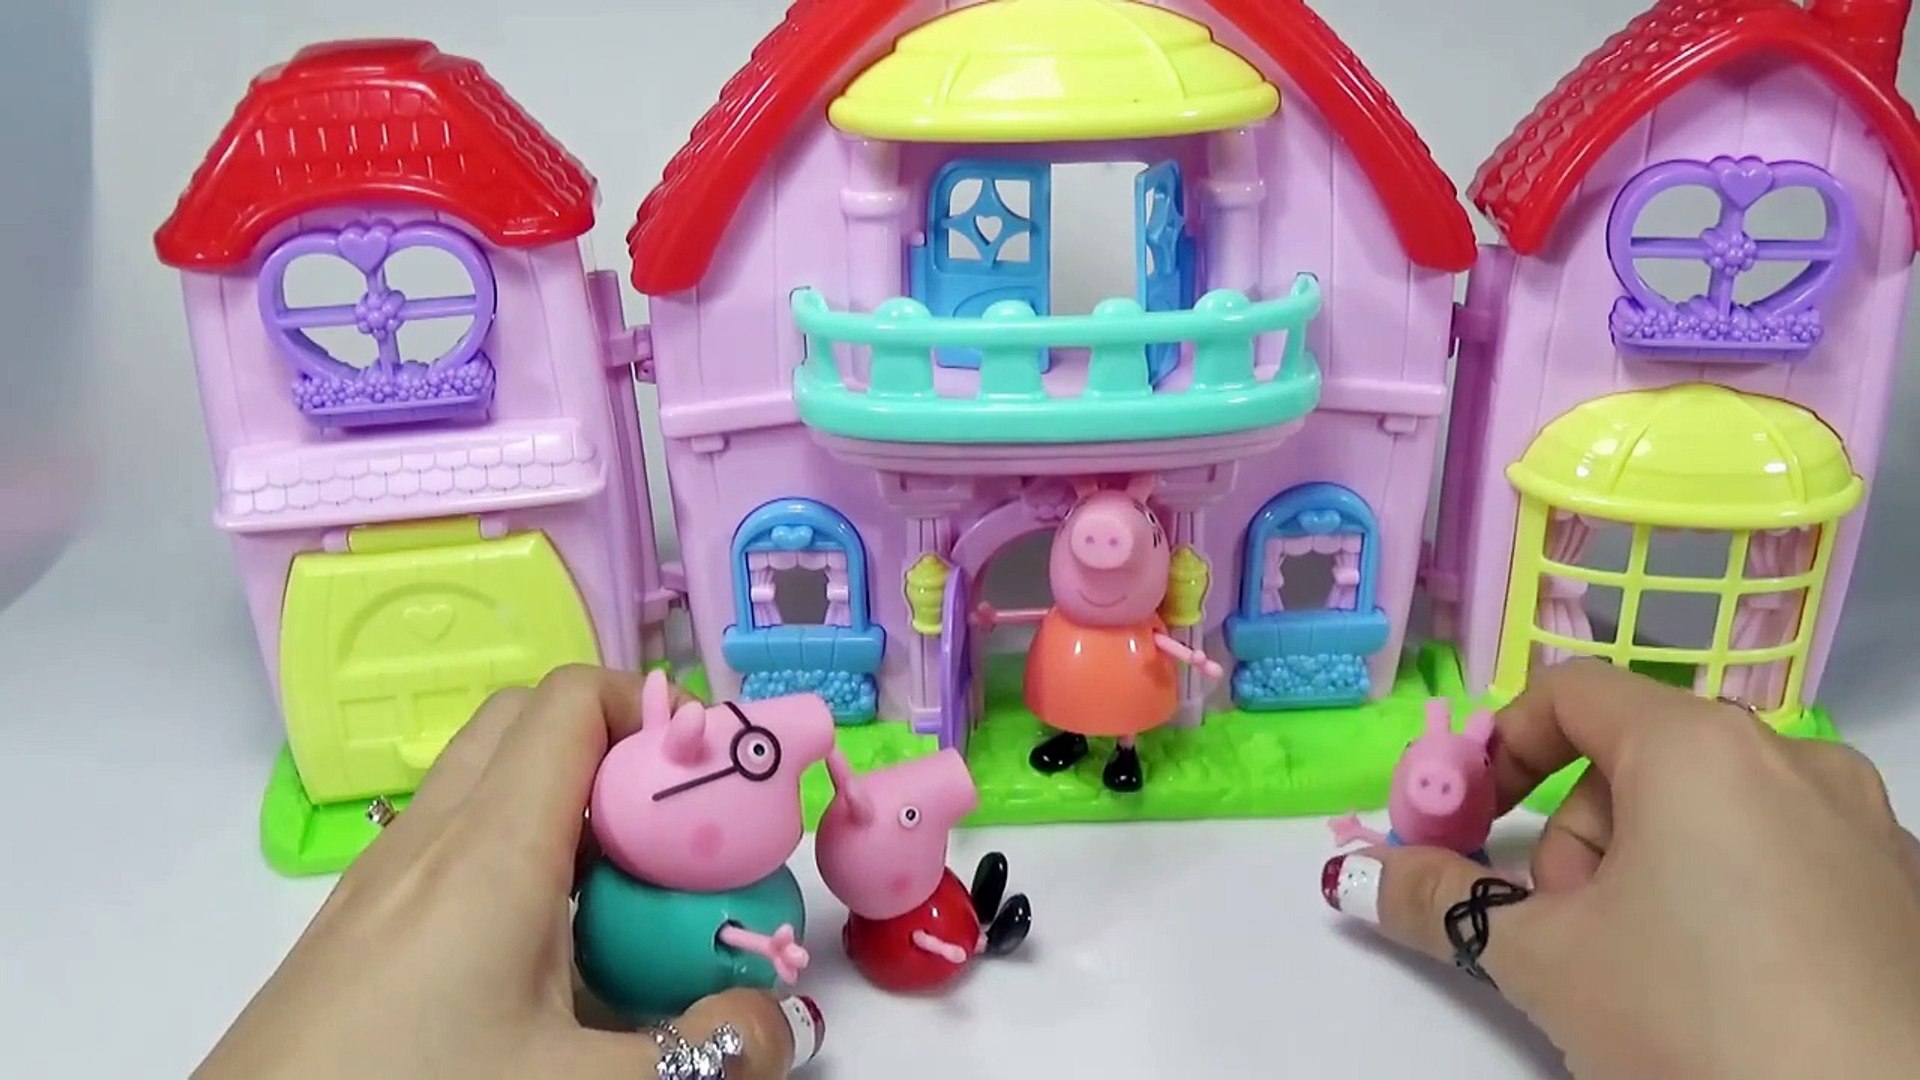 NEW Play Doh Magic Peppa Pig with Pig George Villa PlayDough Playset Pepa Pig Learn English Episodes